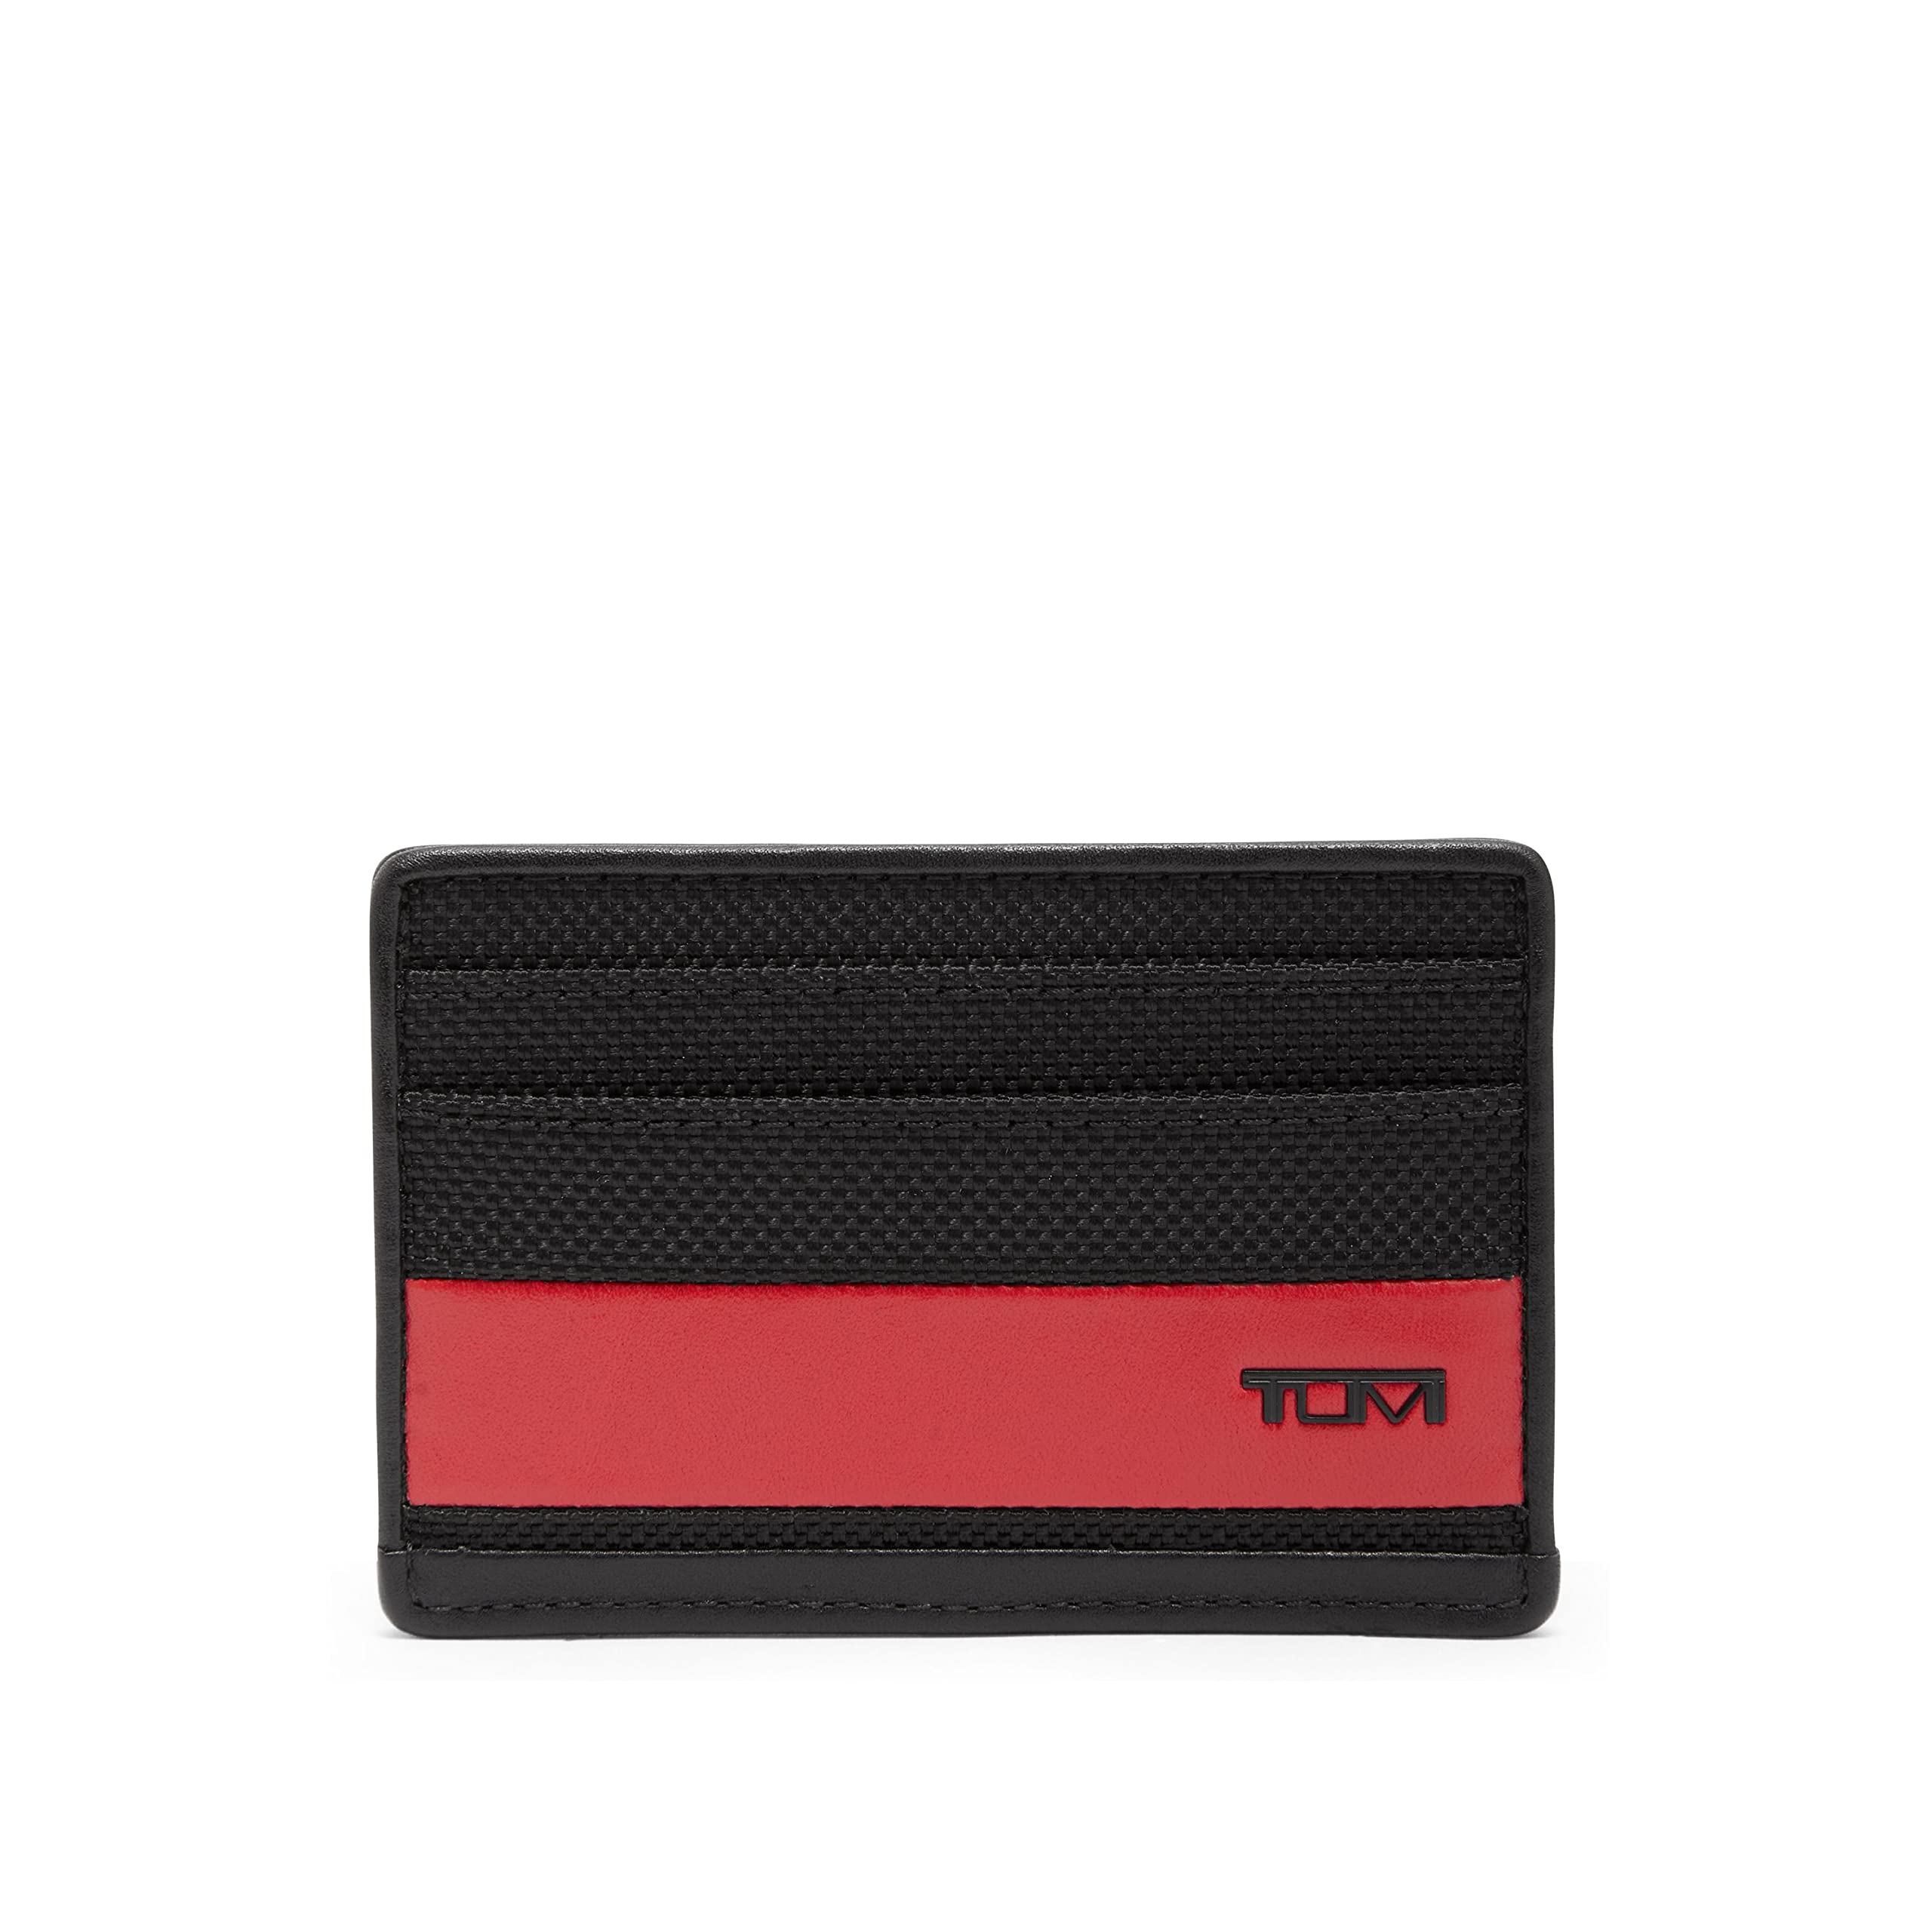 TUMI Alpha Slim Card Case - Black/Red